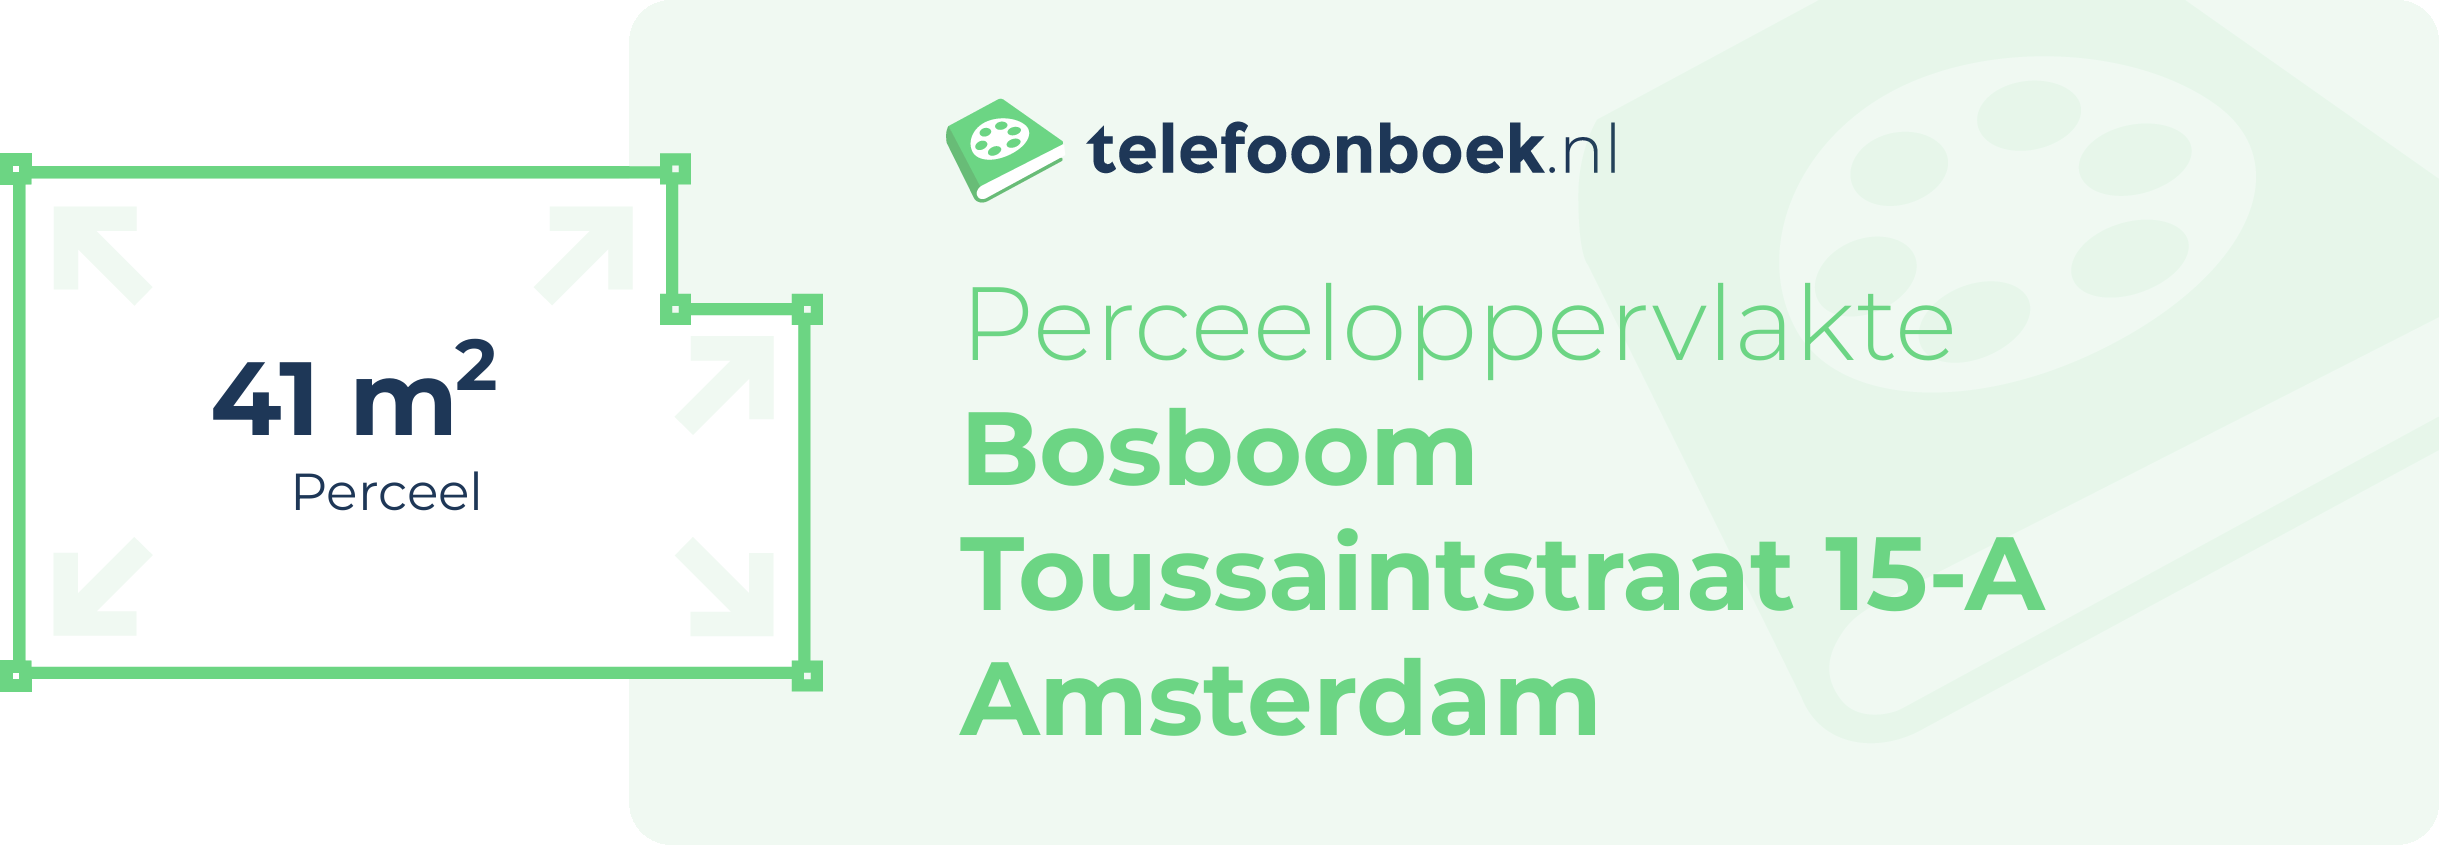 Perceeloppervlakte Bosboom Toussaintstraat 15-A Amsterdam